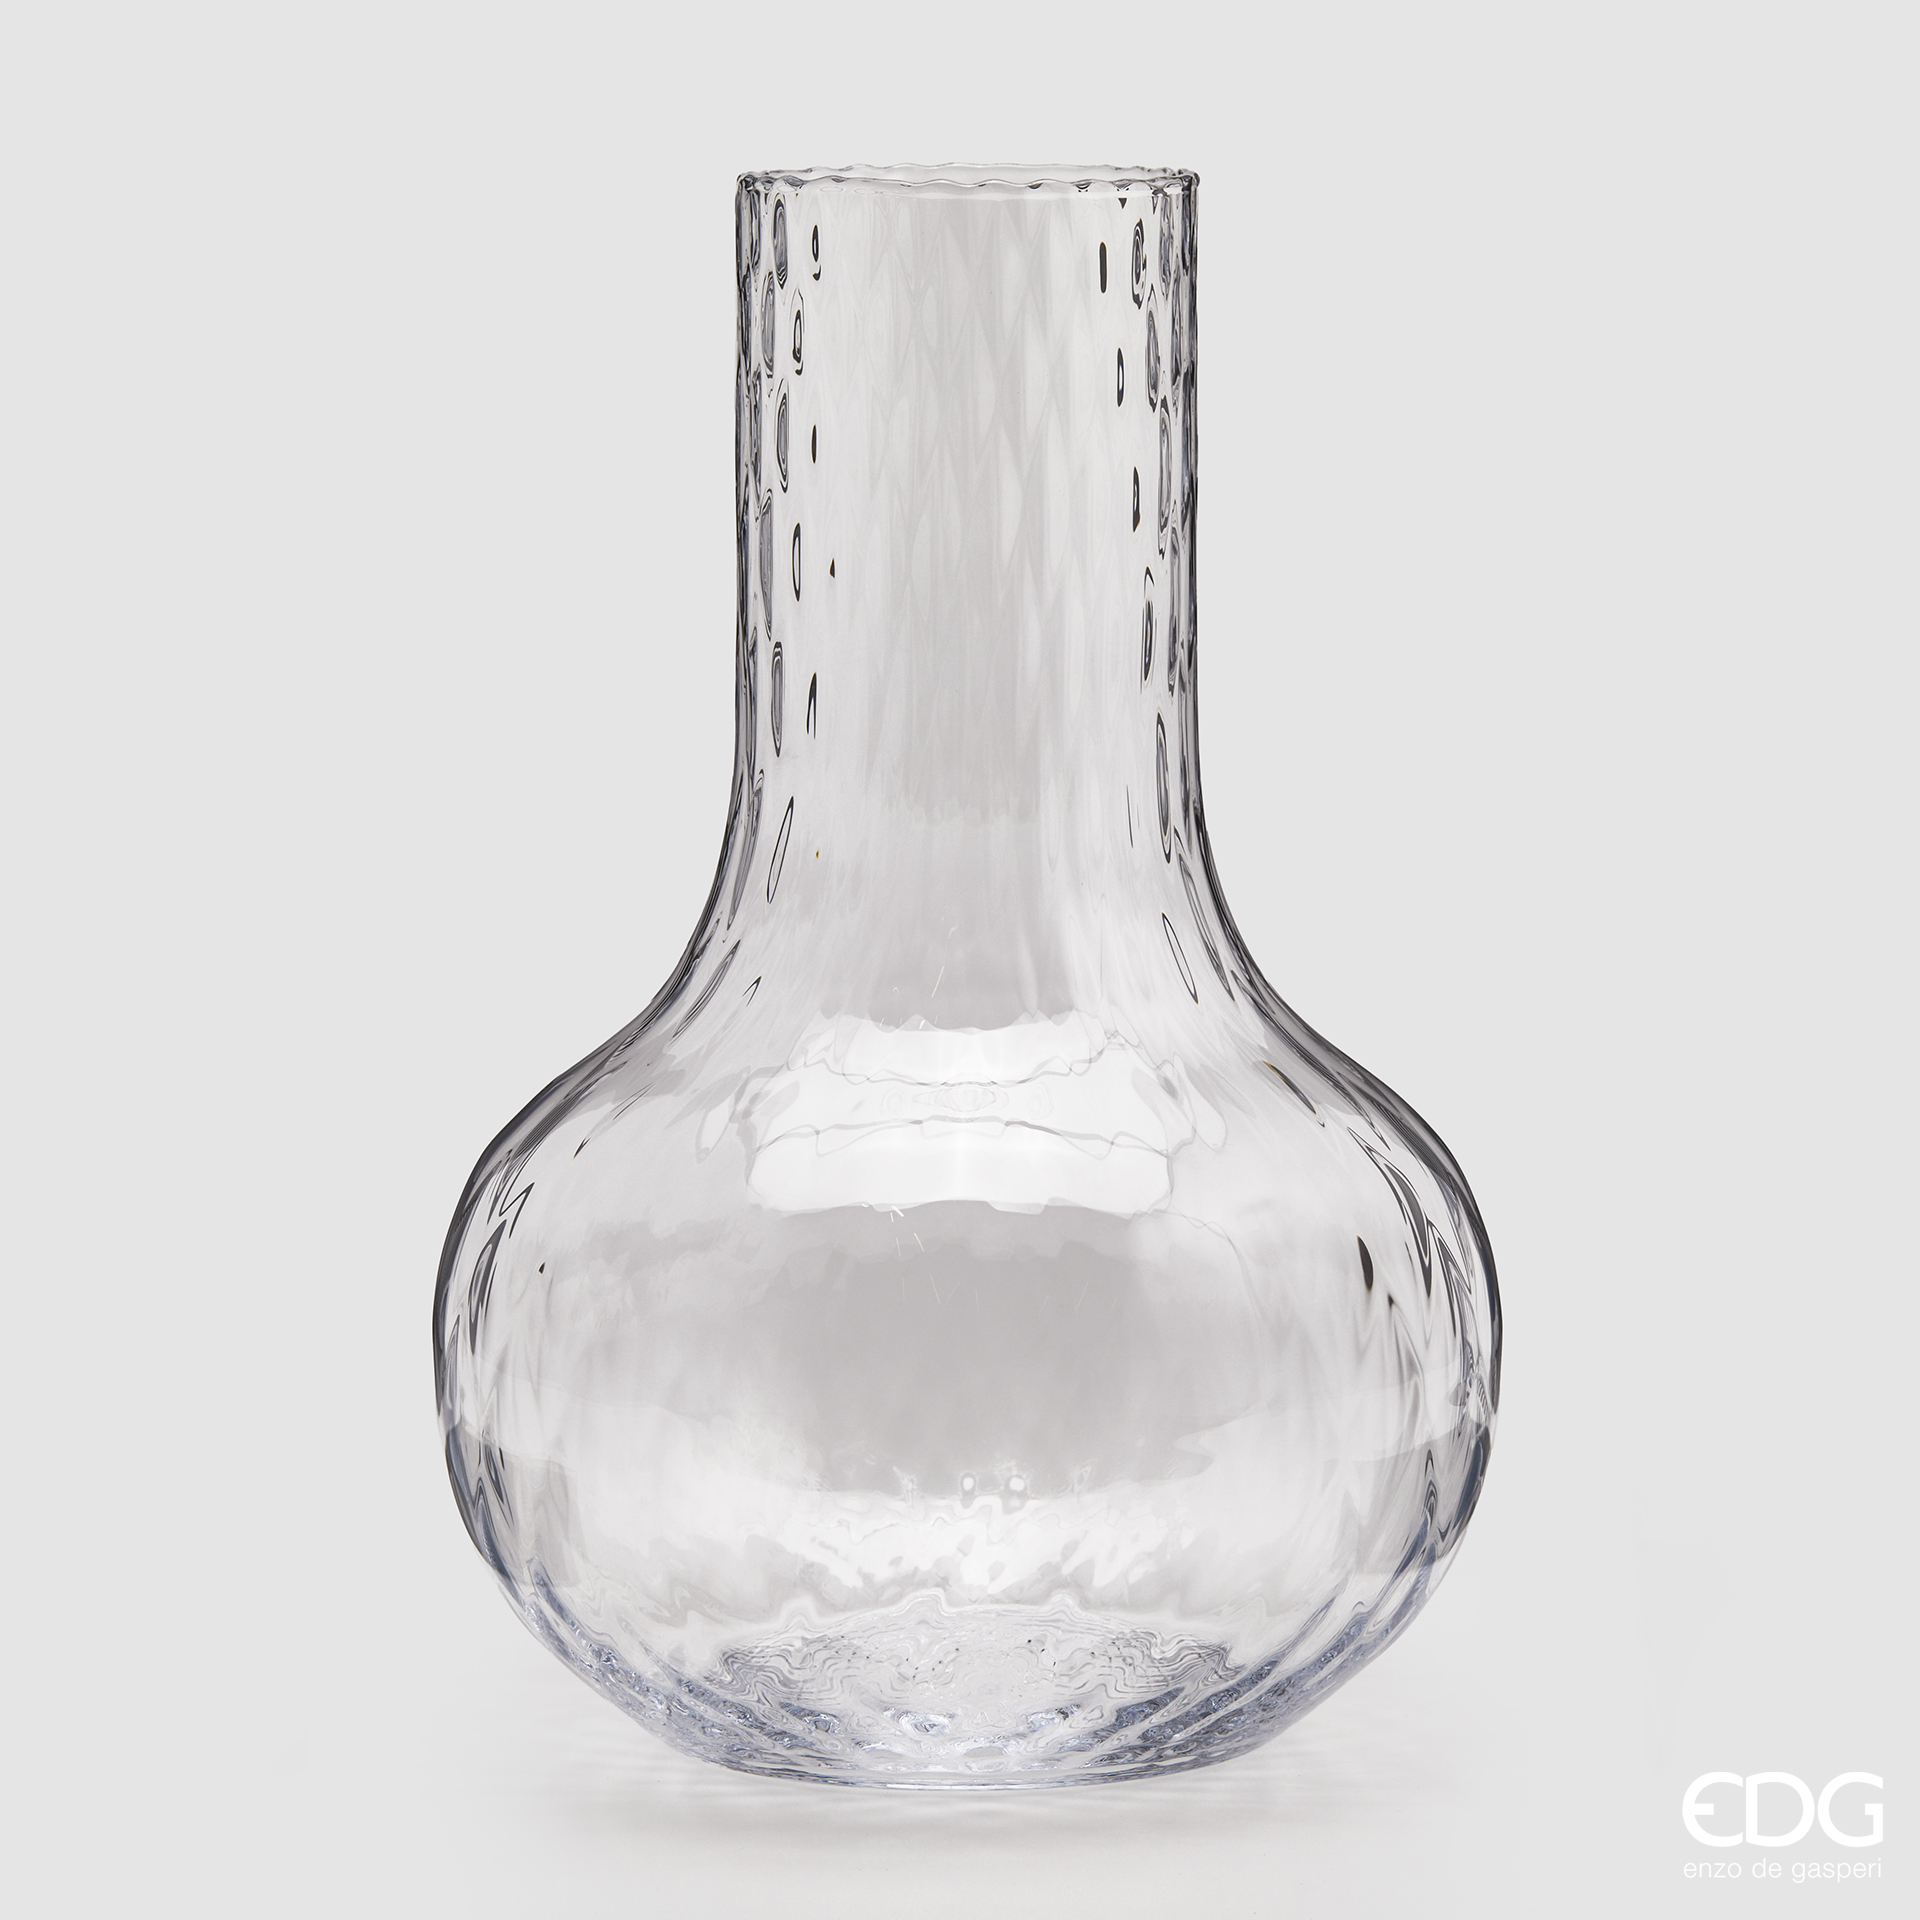 Vaso optic in vetro con collo - H.37x26 cm - EDG